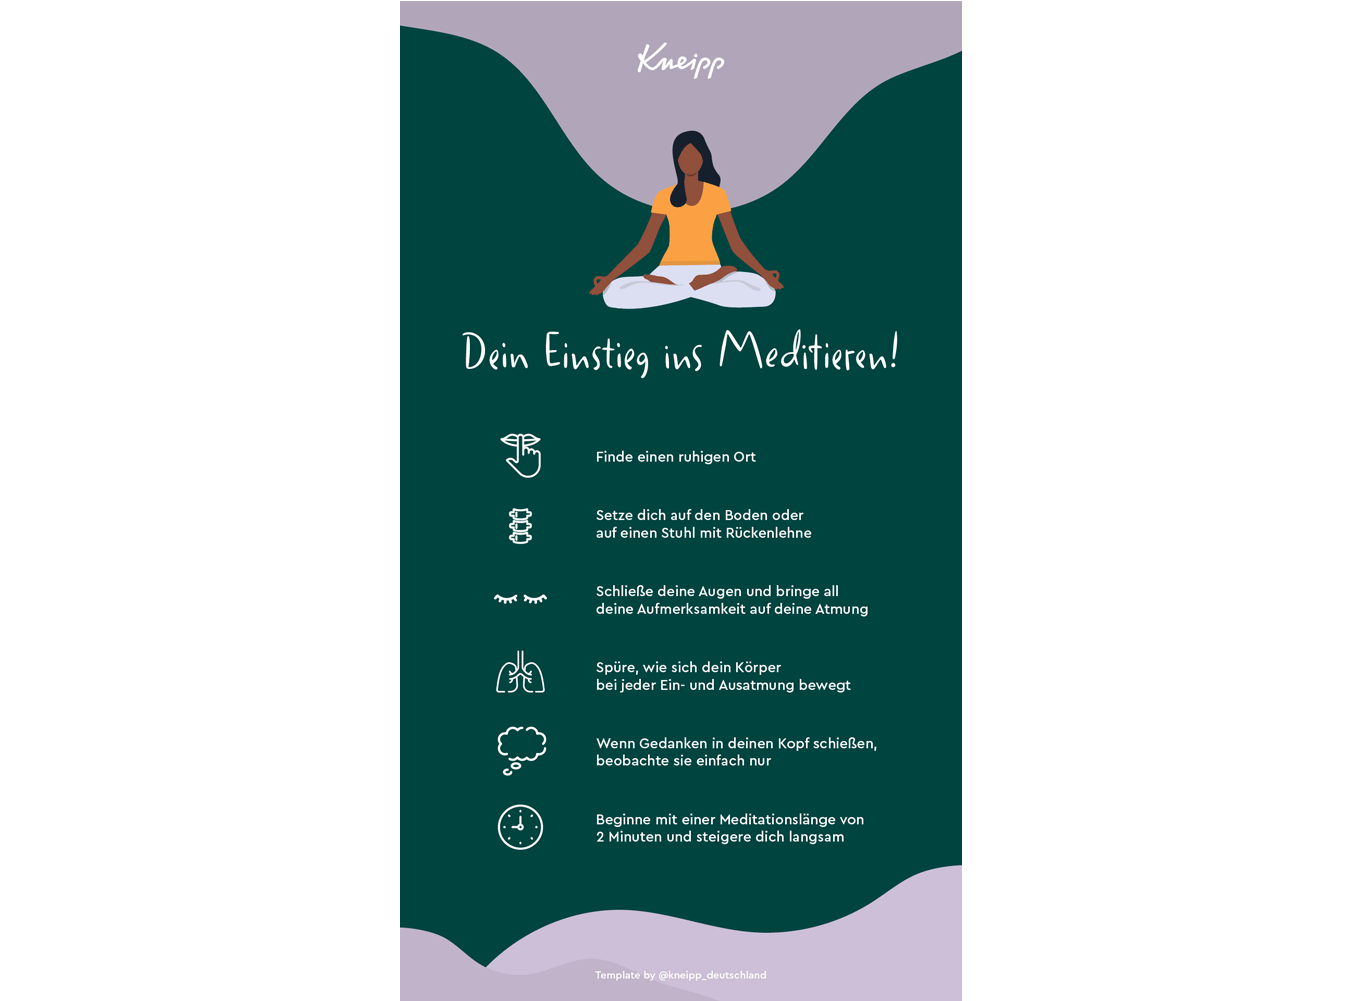 Die Meditations-Checkliste